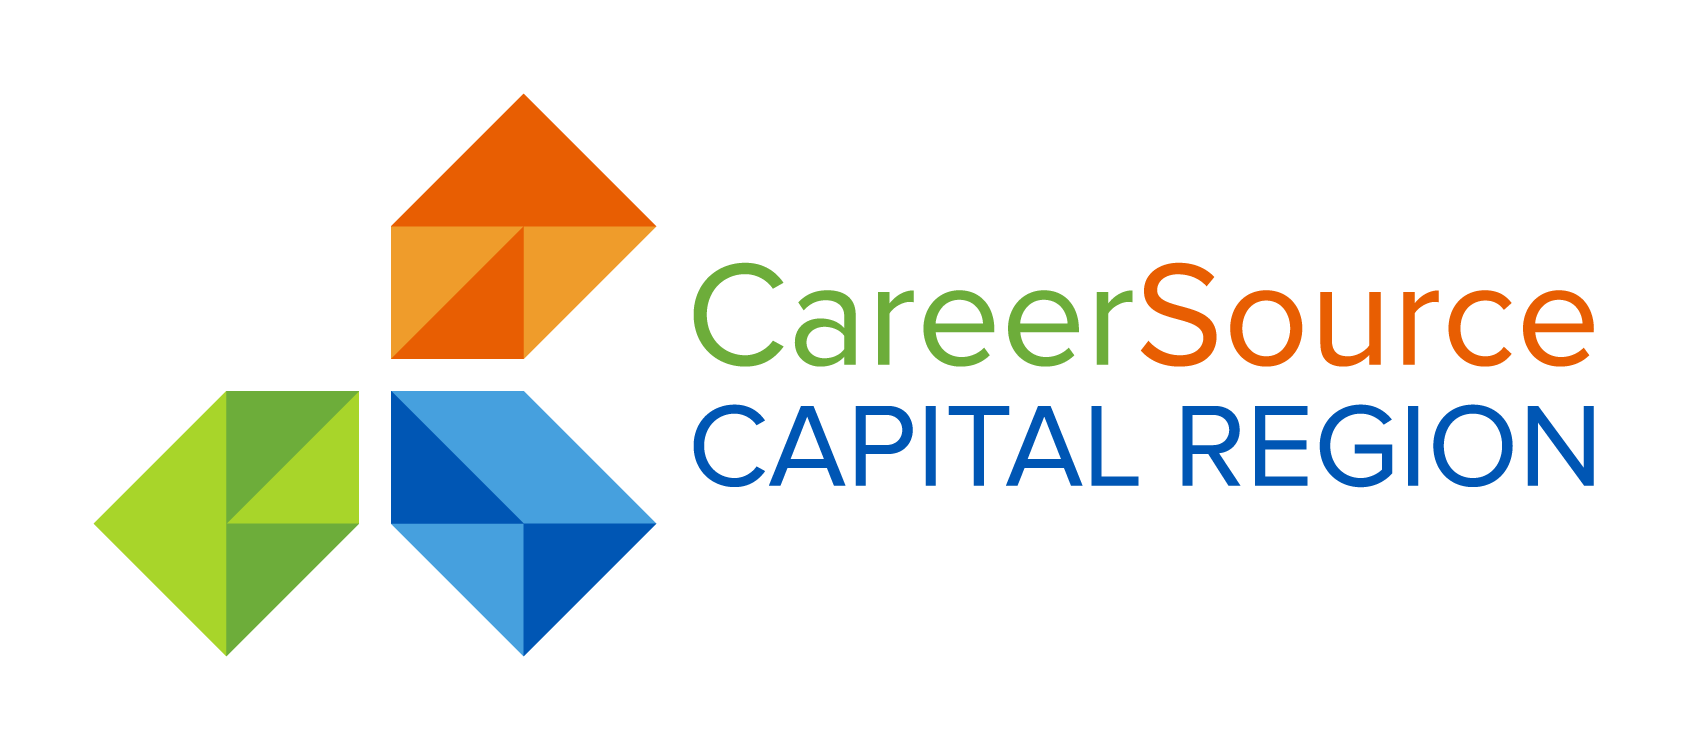 CareerSource Capital Region logo